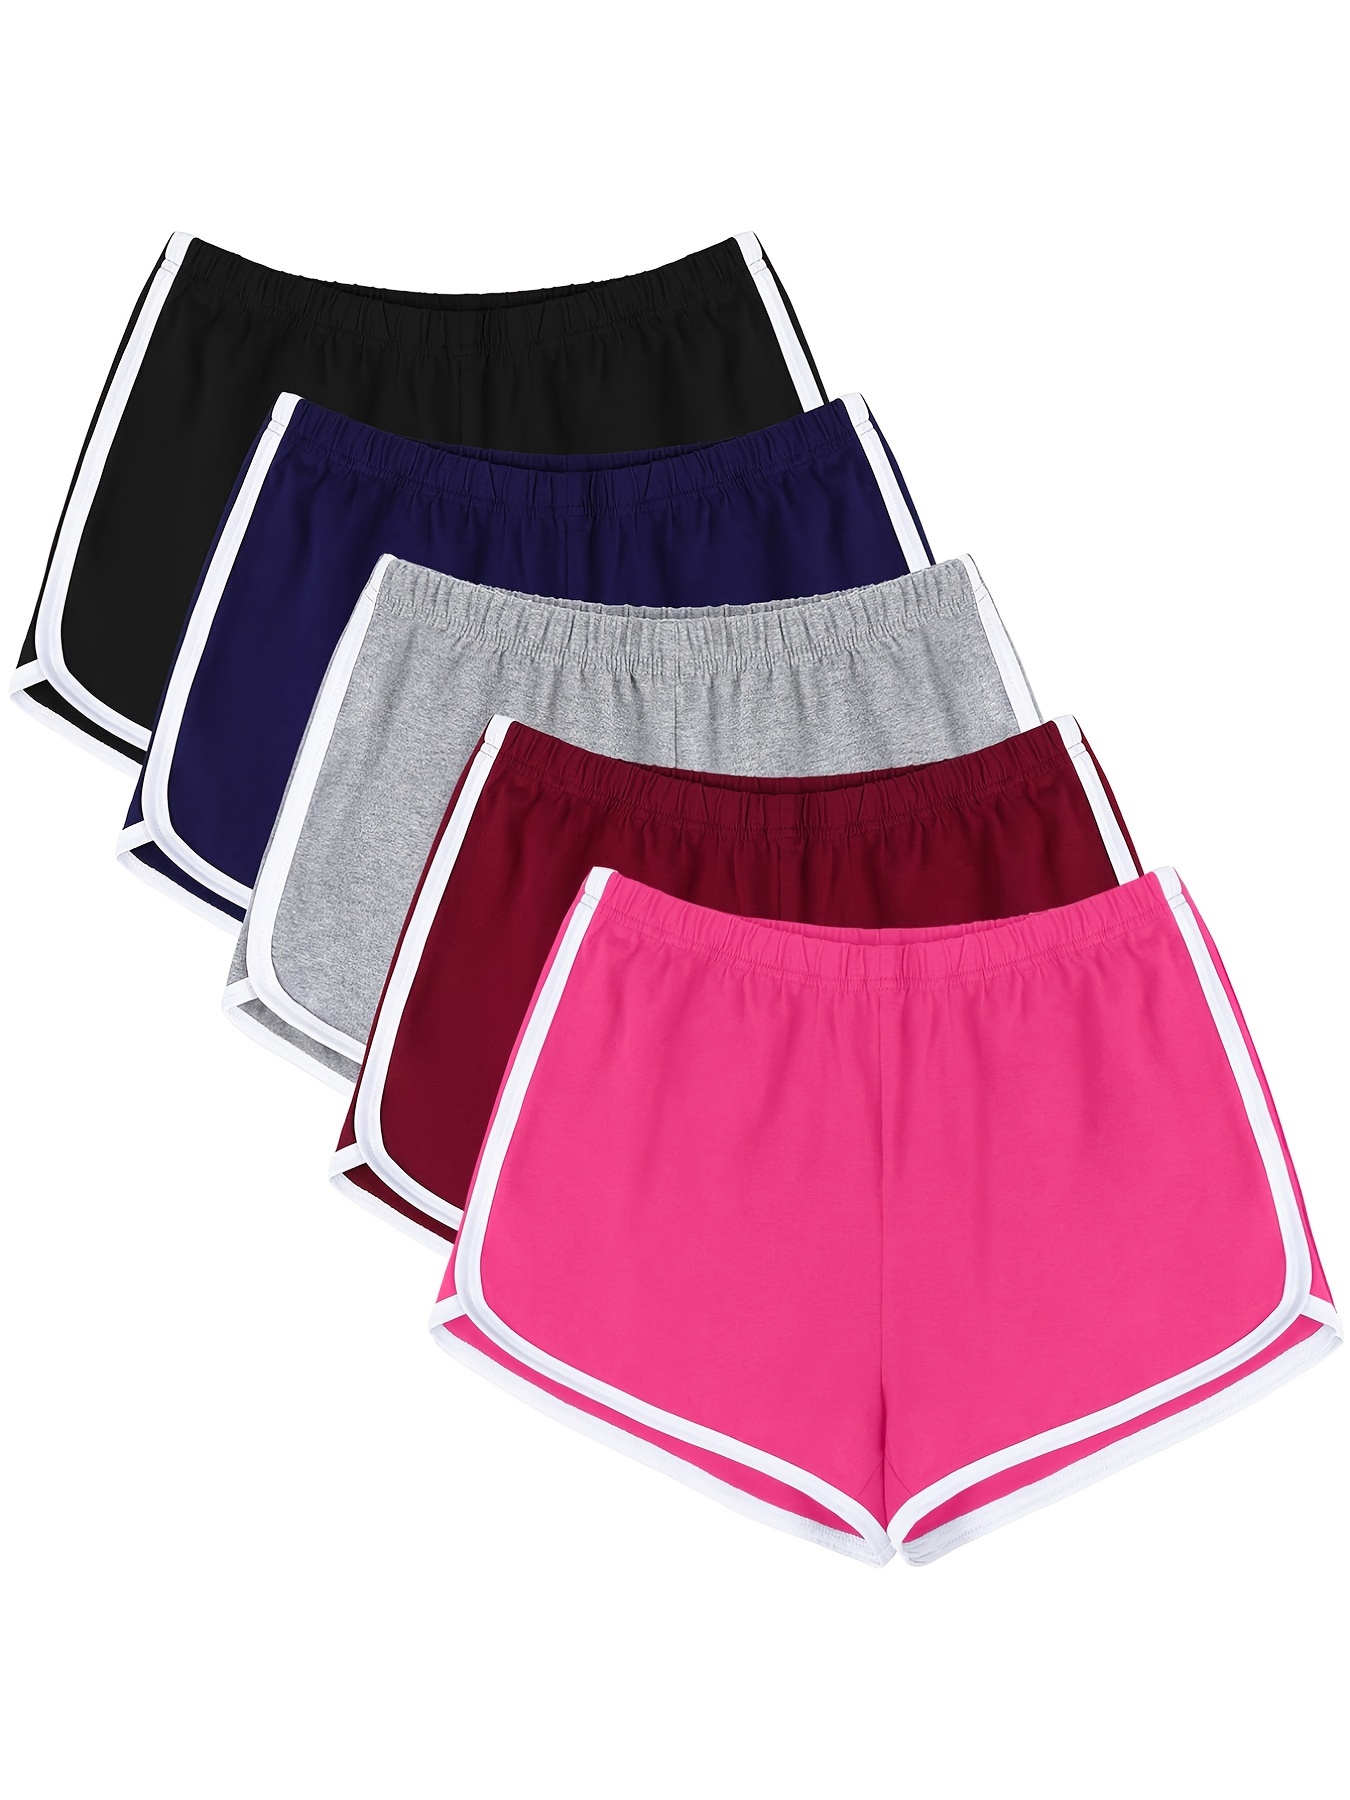 Women's Running Athletic Shorts Yoga Short Pants Women Gym Dance Workout  Shorts, Red, XL